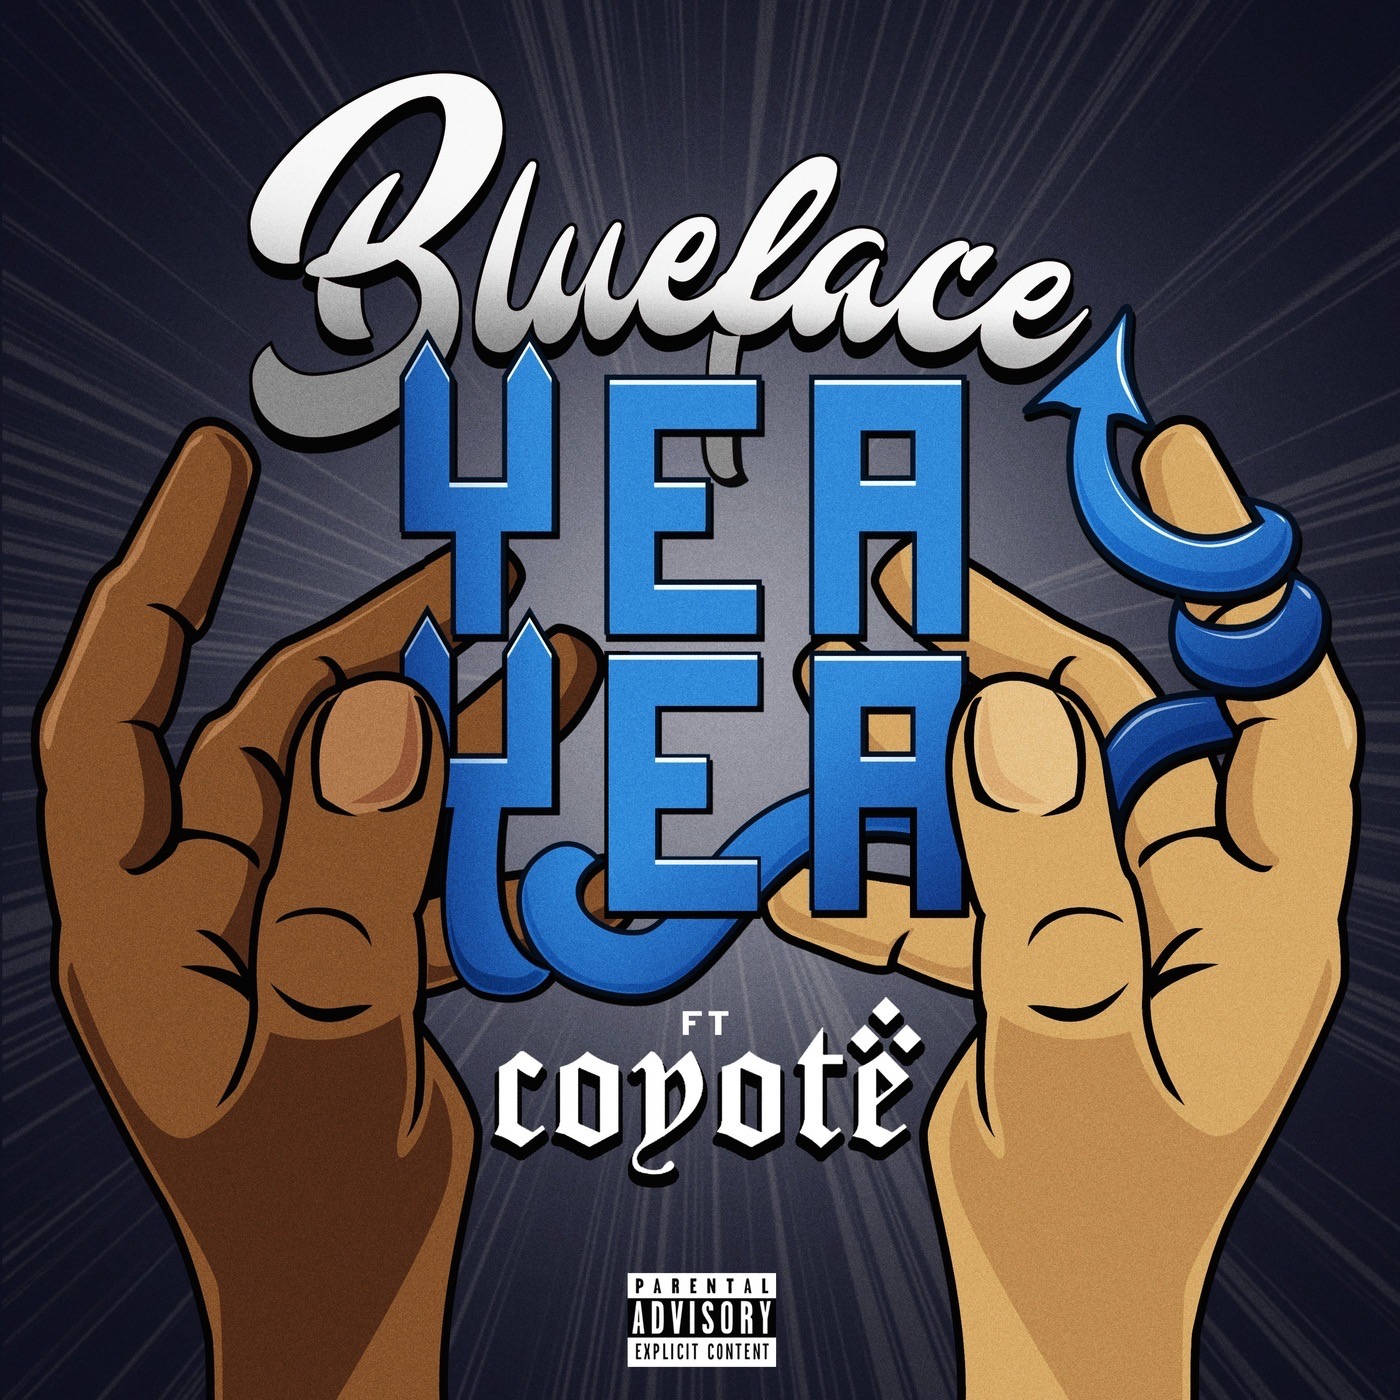 Blueface ft Coyote - Yea Yea